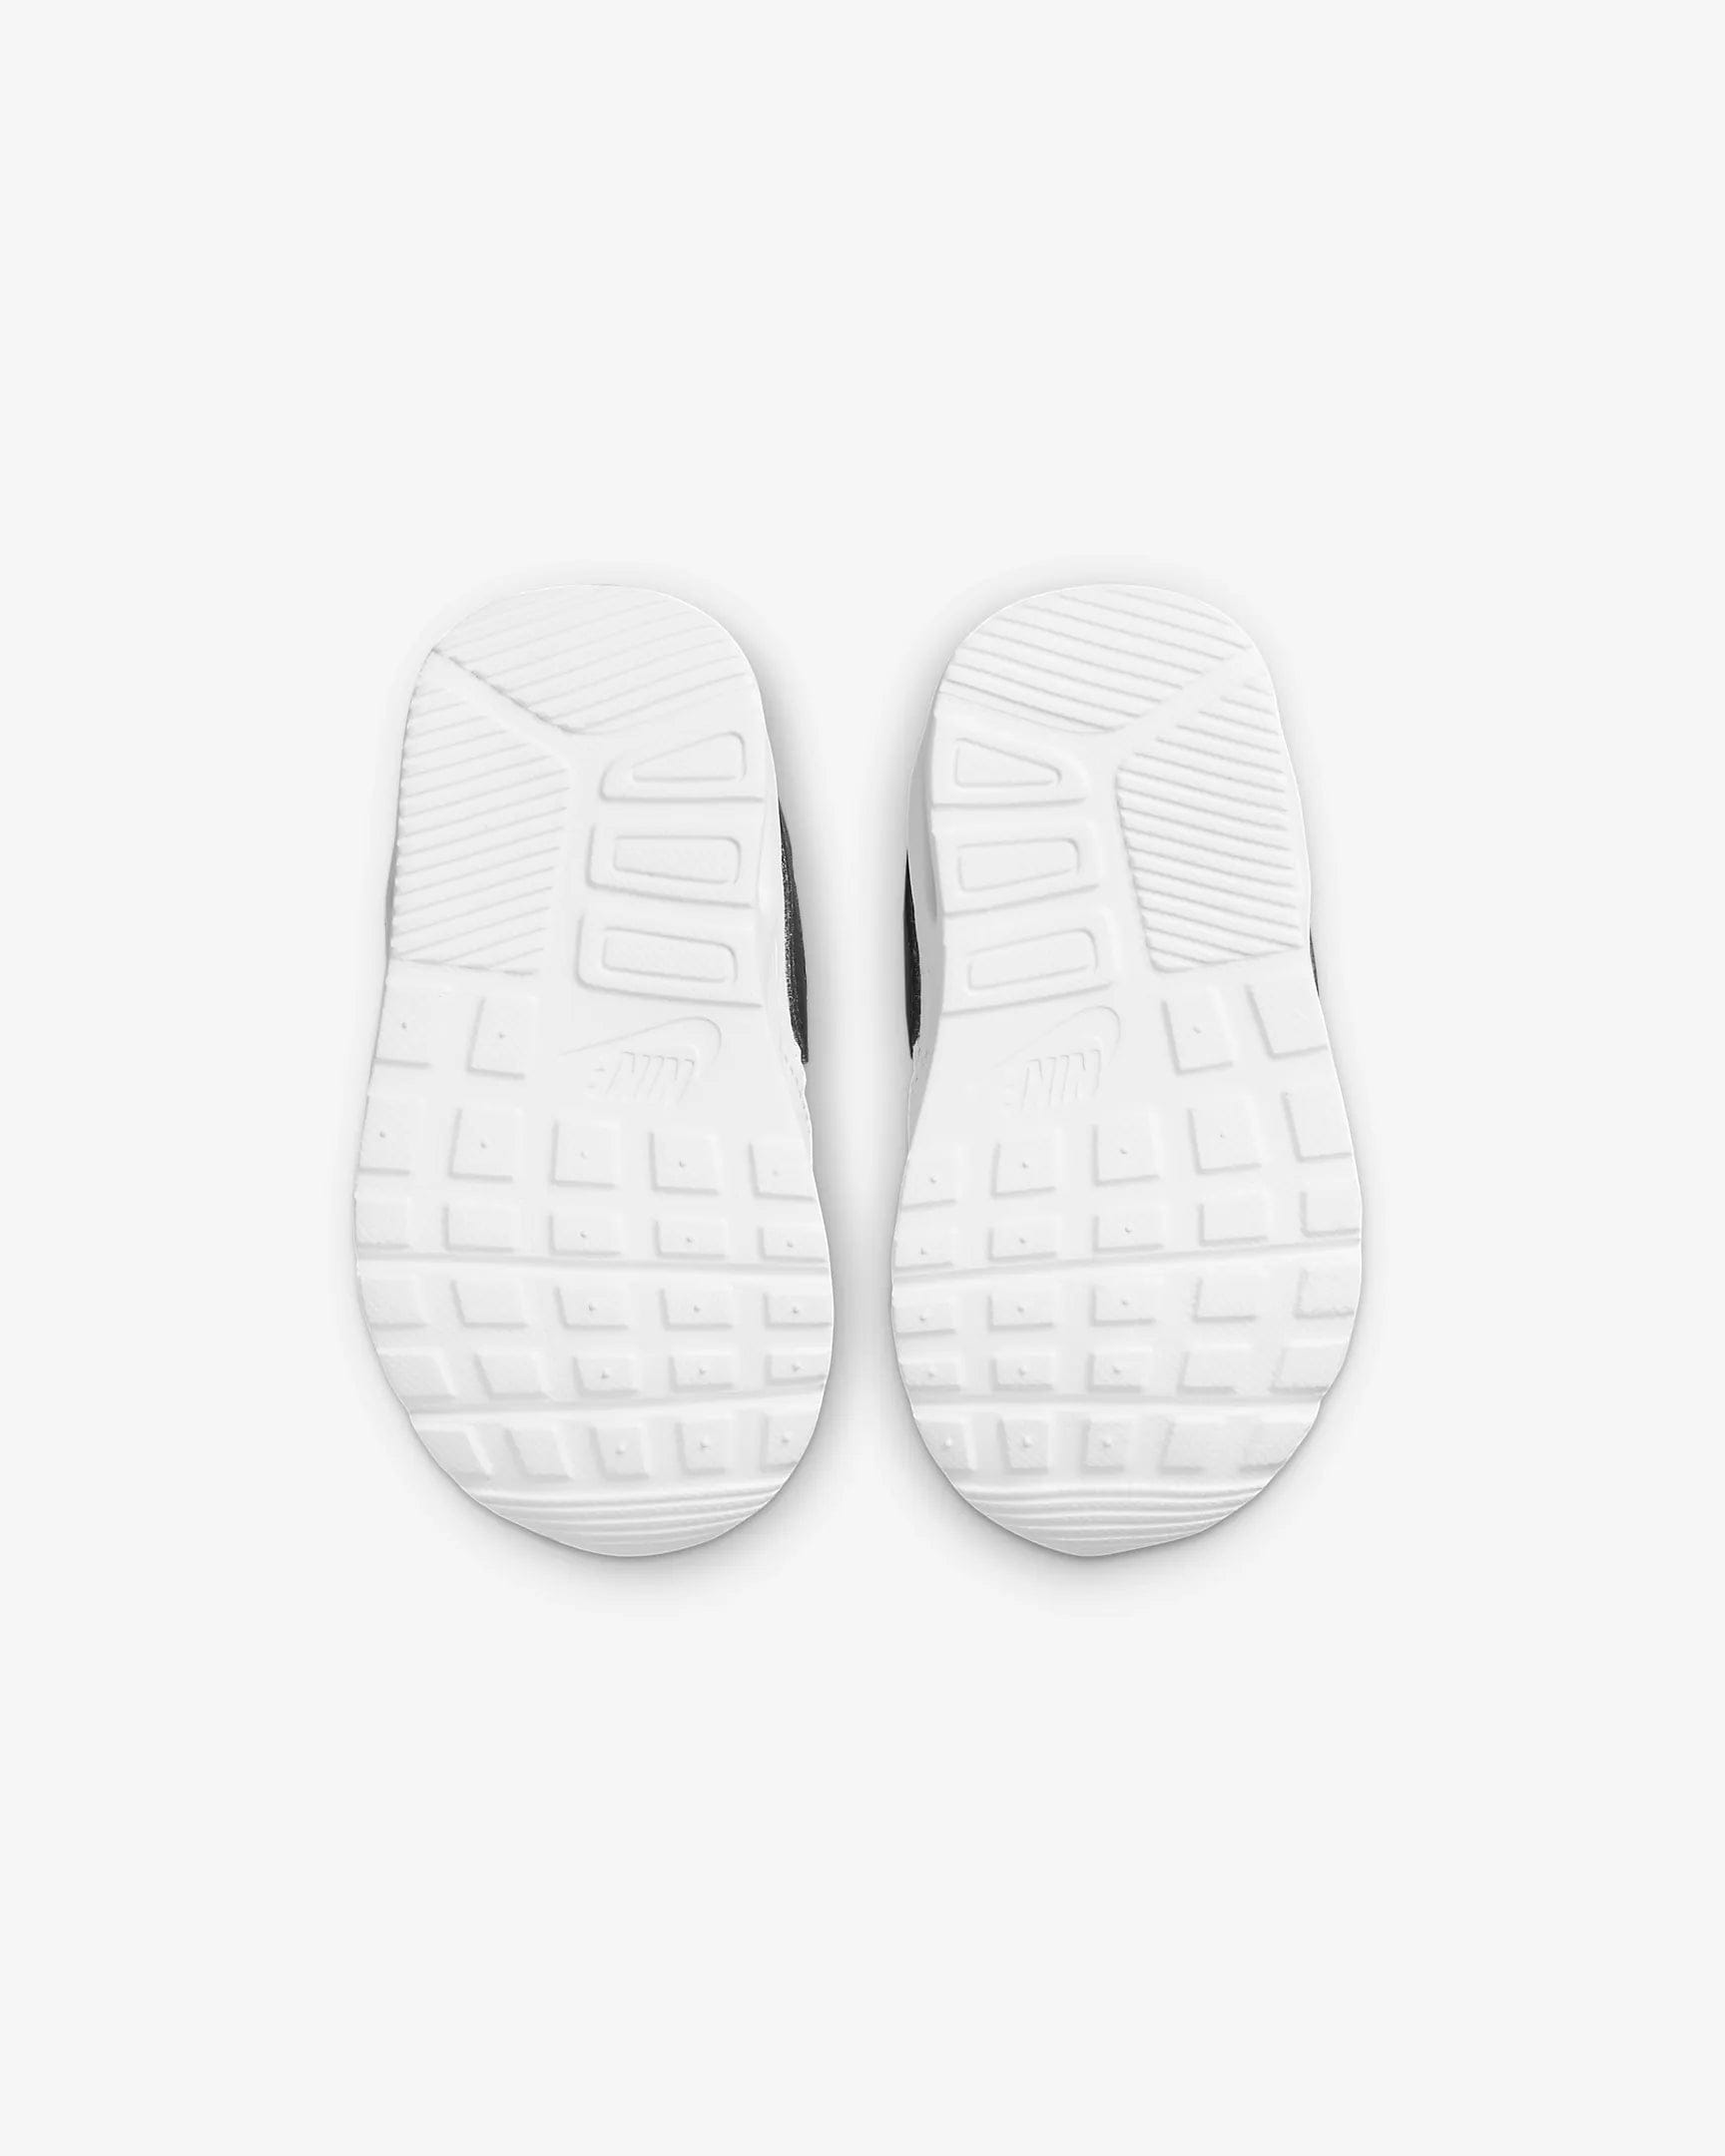 Nike NIKE INFANT'S Air Max SC WHITE/BLACK Shoes - INSPORT